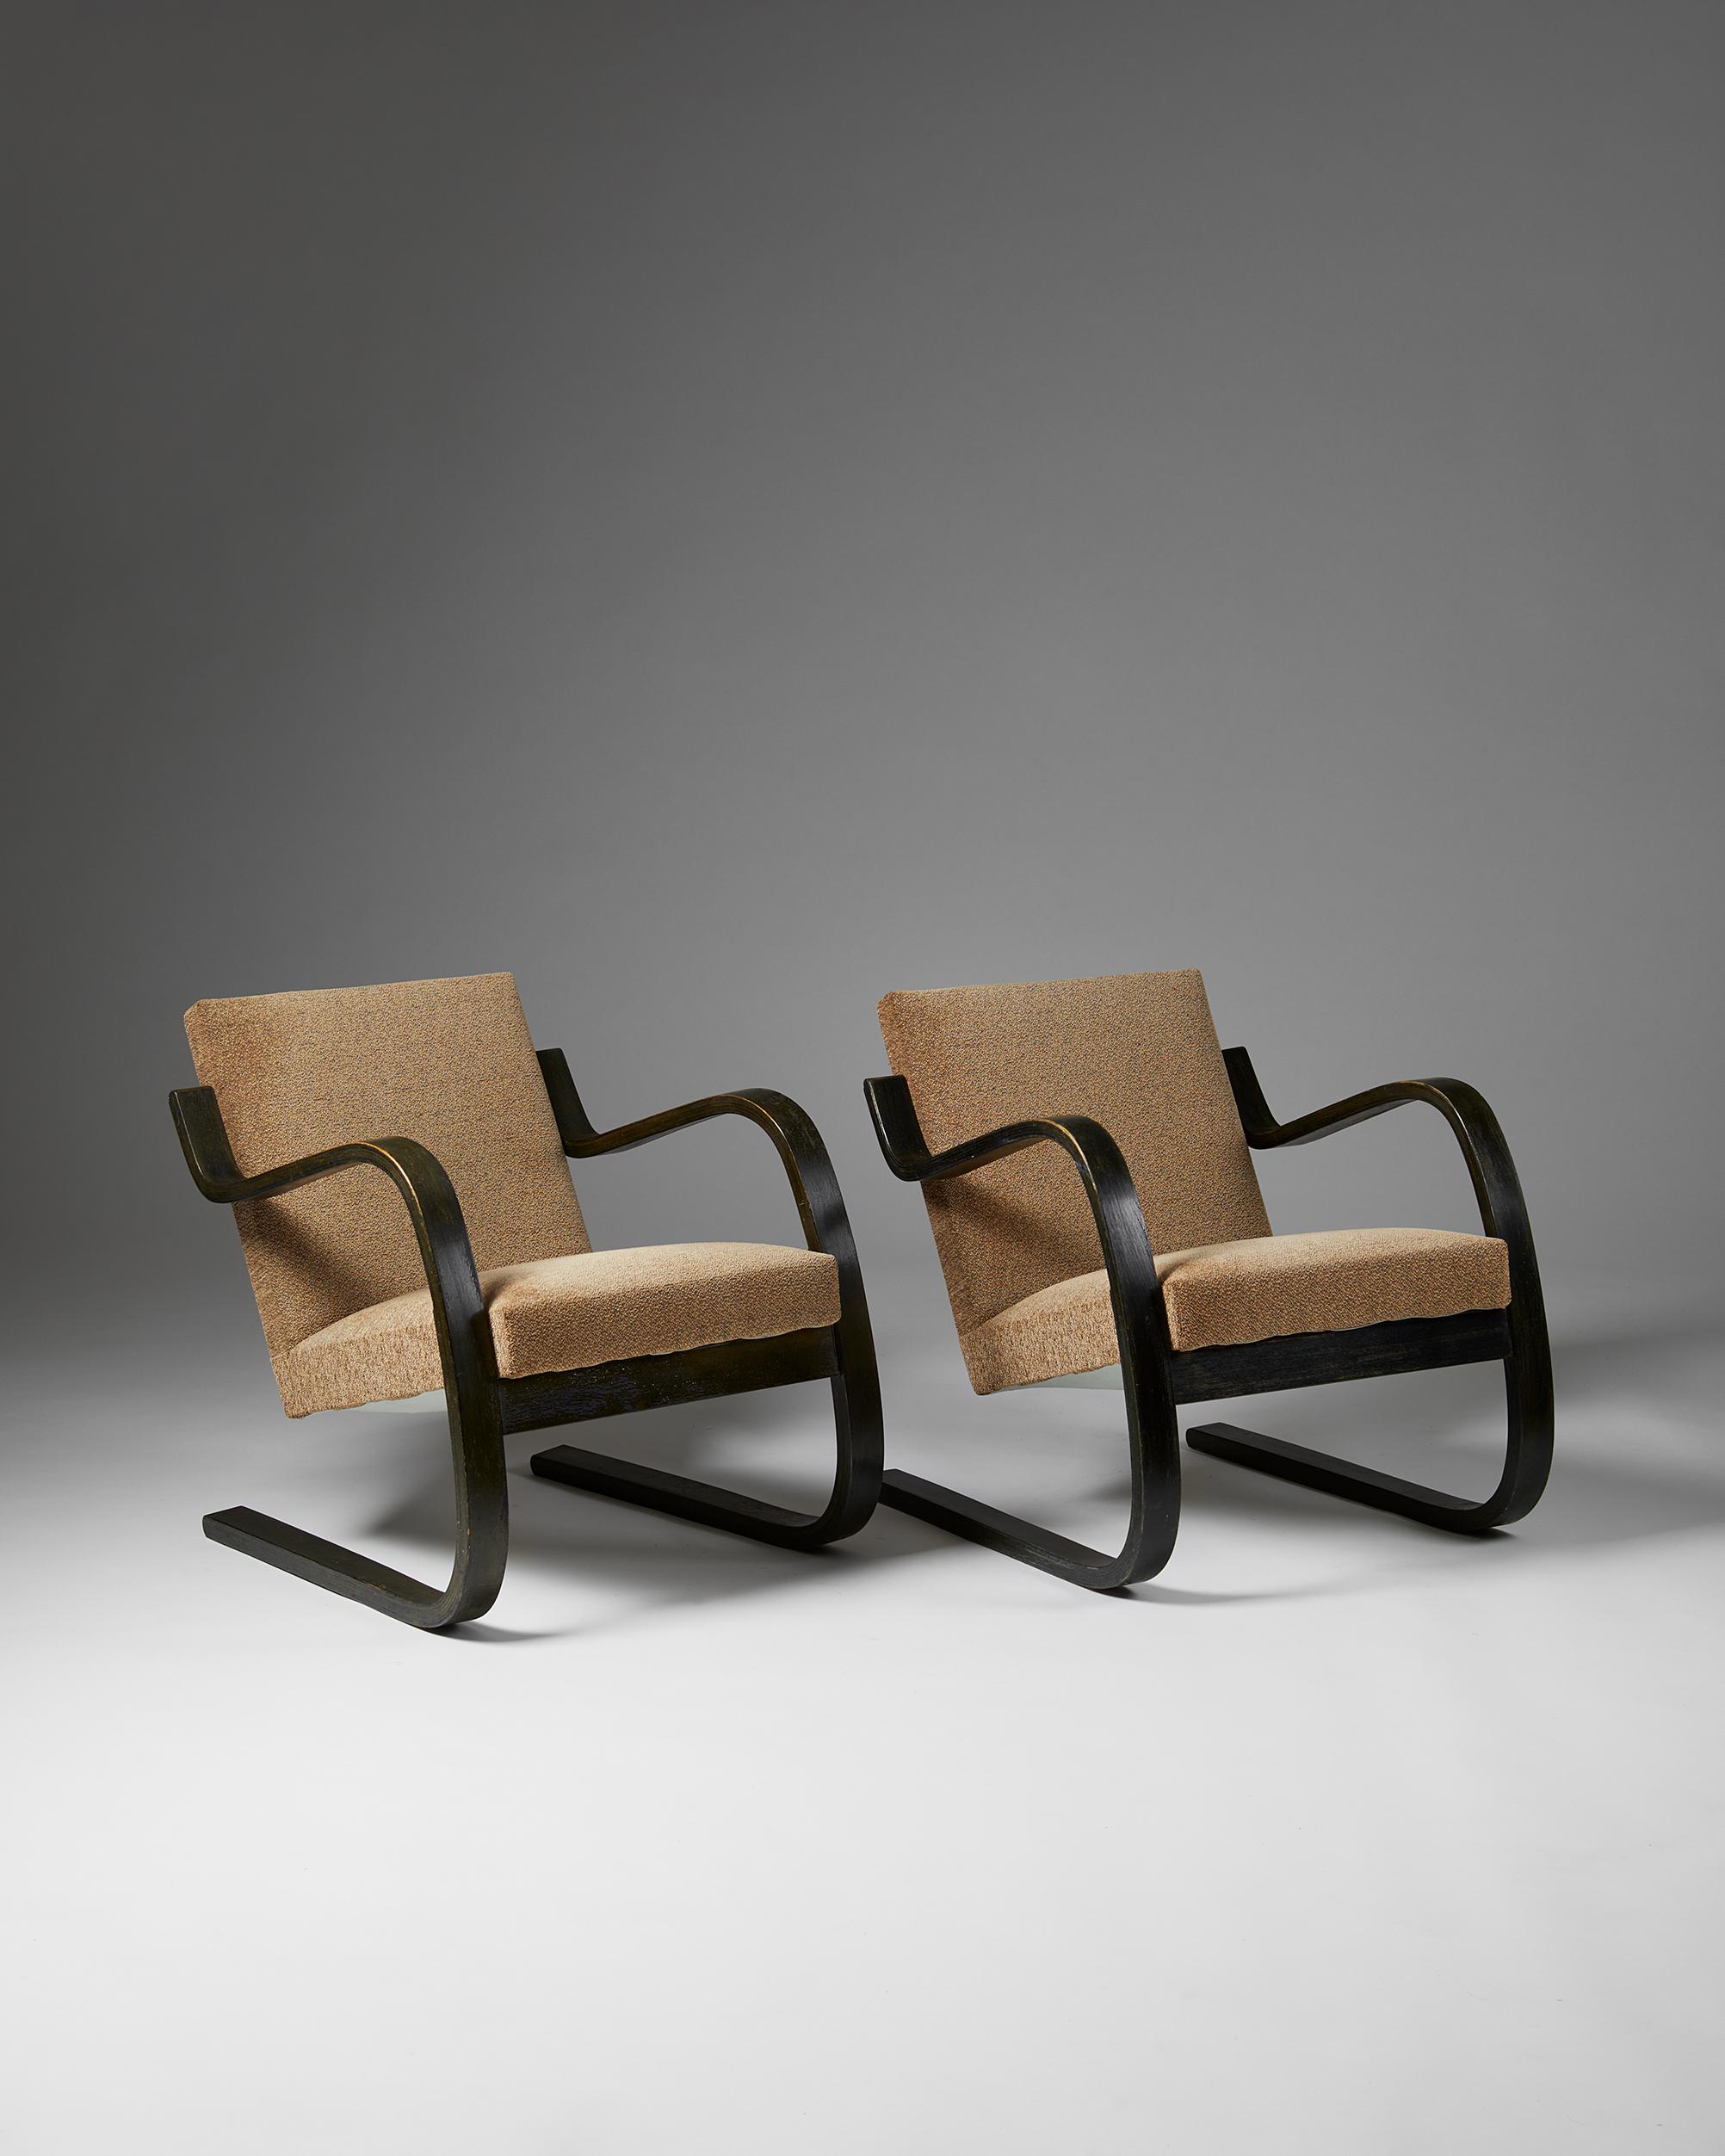 Mid-Century Modern Pair of Chairs ‘Model 34’ Designed by Alvar Aalto for Artek, Finland, 1930's